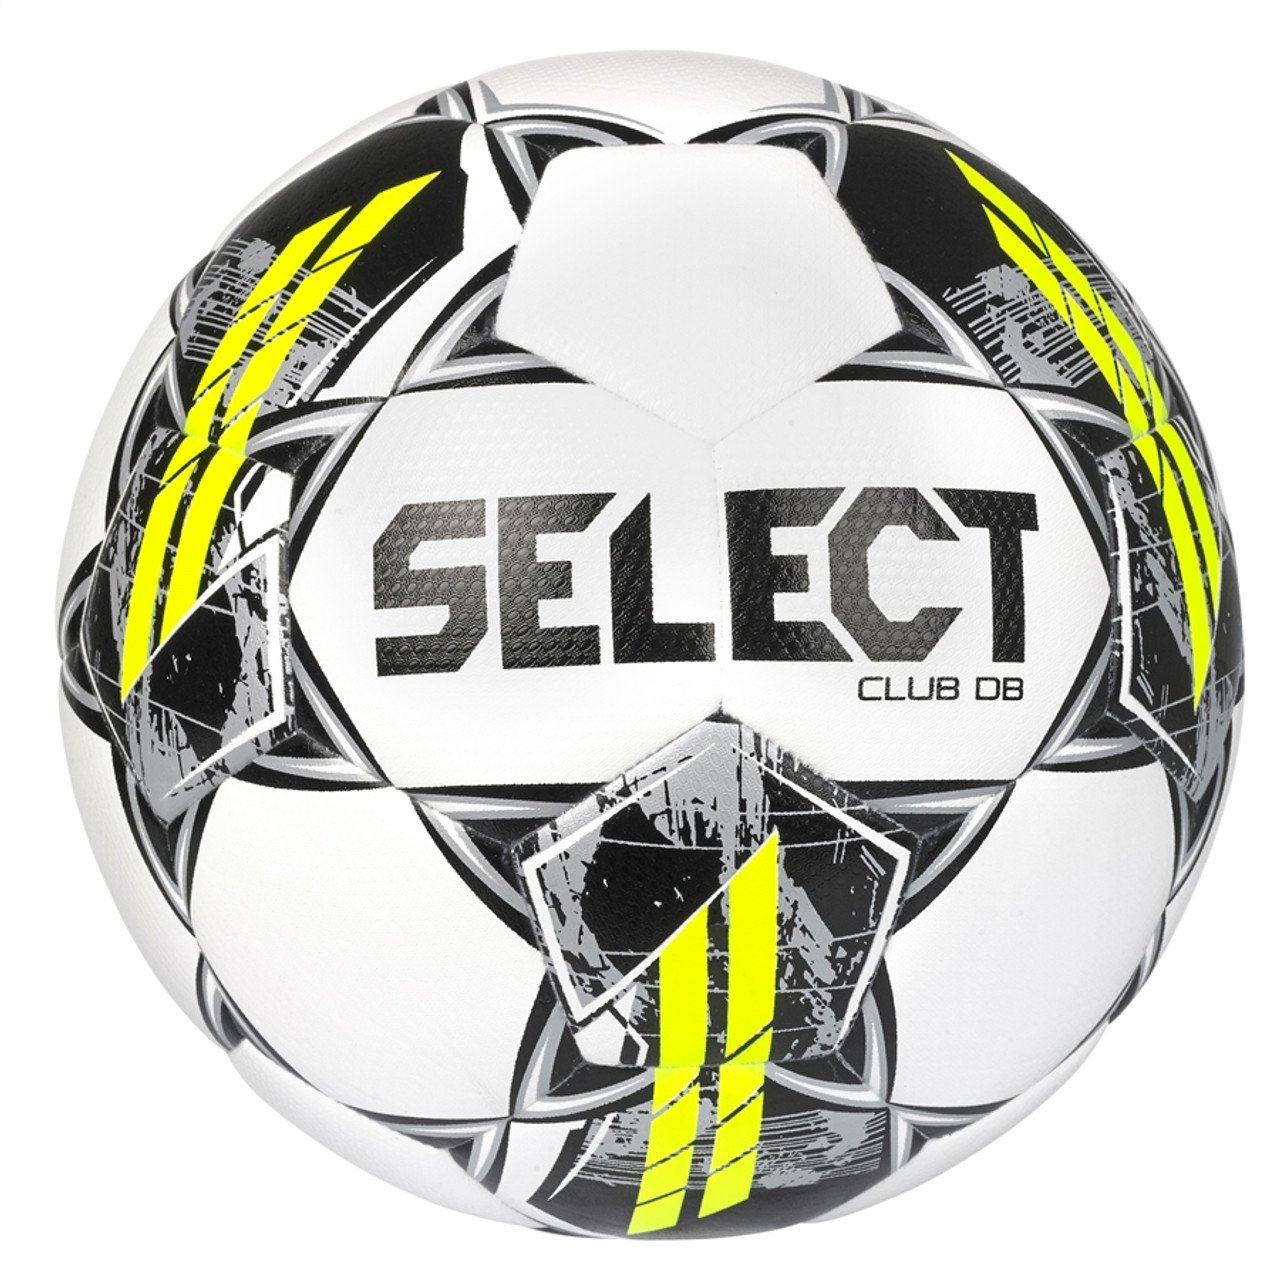 Мяч футбольный SELECT Club DB FIFA Basic v23 (045) біл/сірий, 5